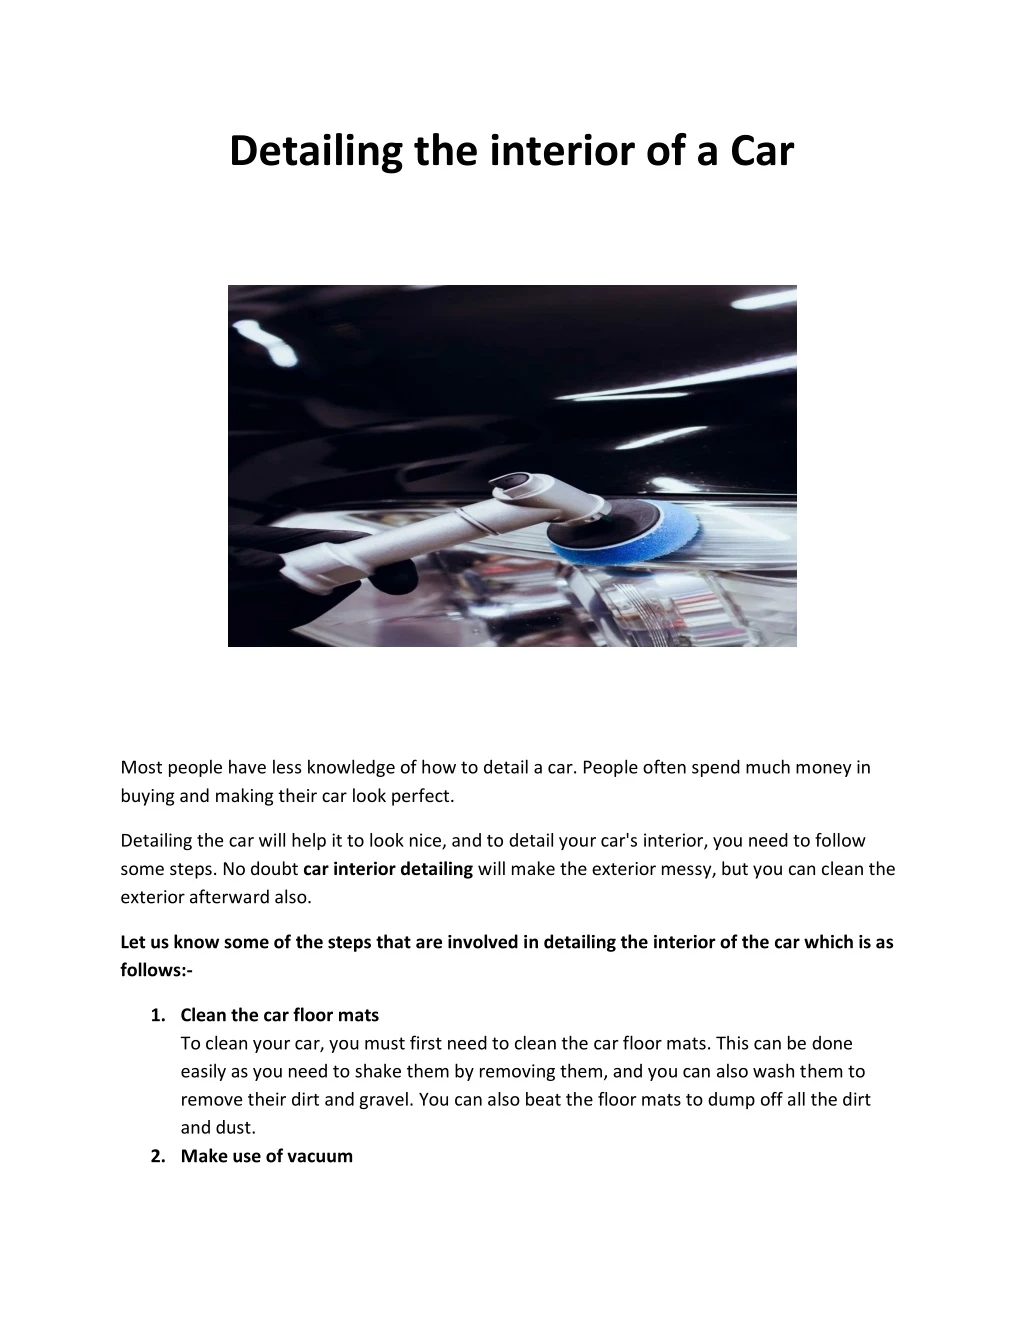 detailing the interior of a car